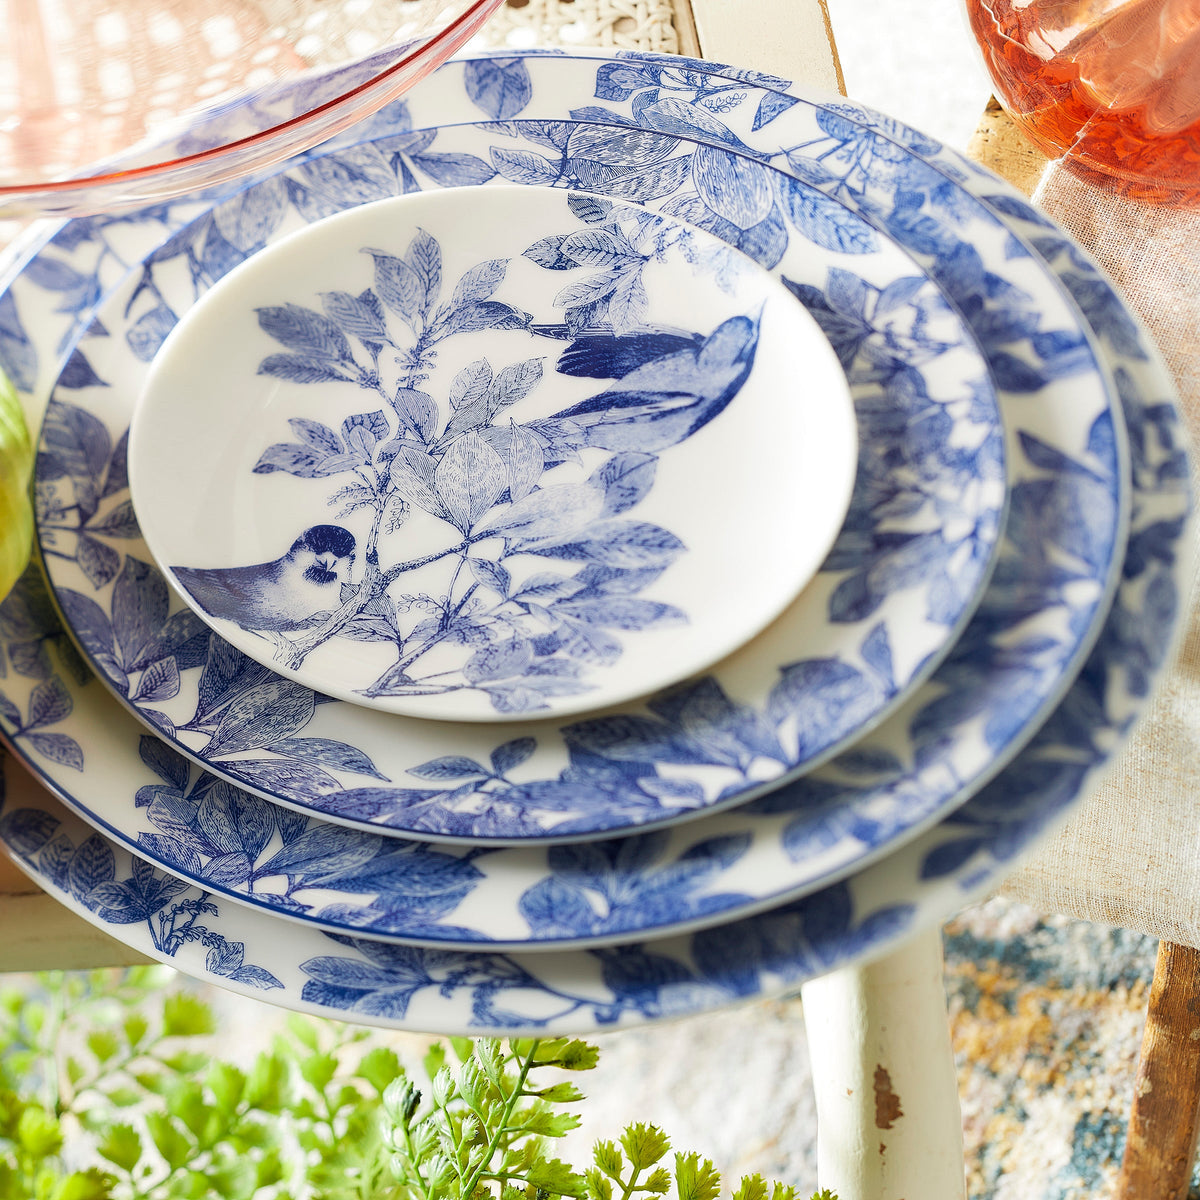 A set of Arbor Blue Porcelain Plates by Caskata Artisanal Home on a table.